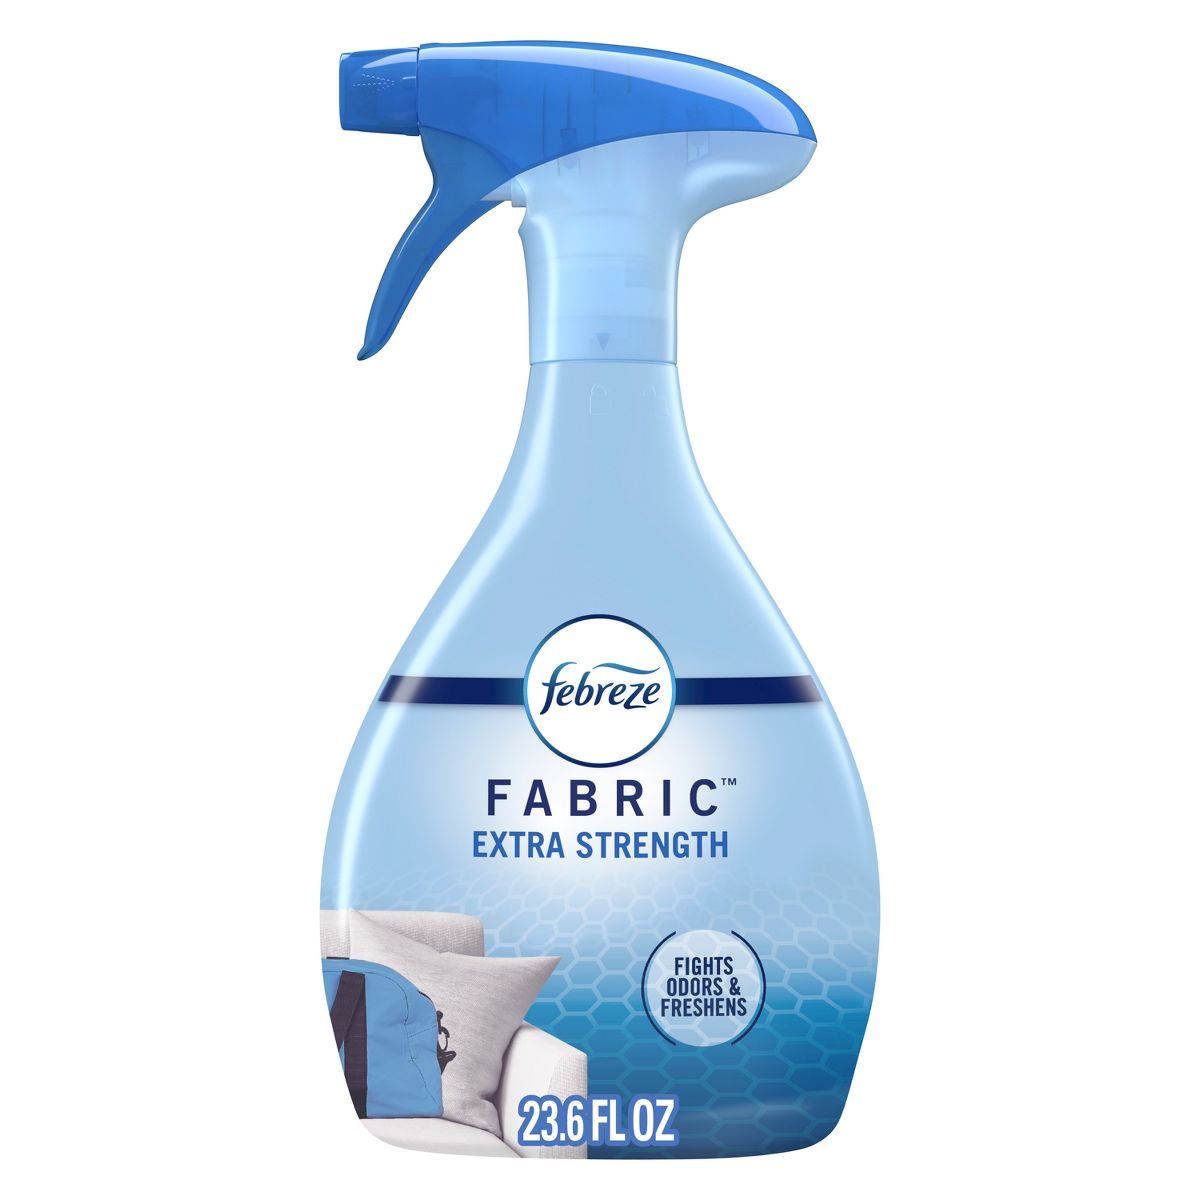 Febreze Fabric Extra Strength Air Freshener - 23.6 fl oz | Target